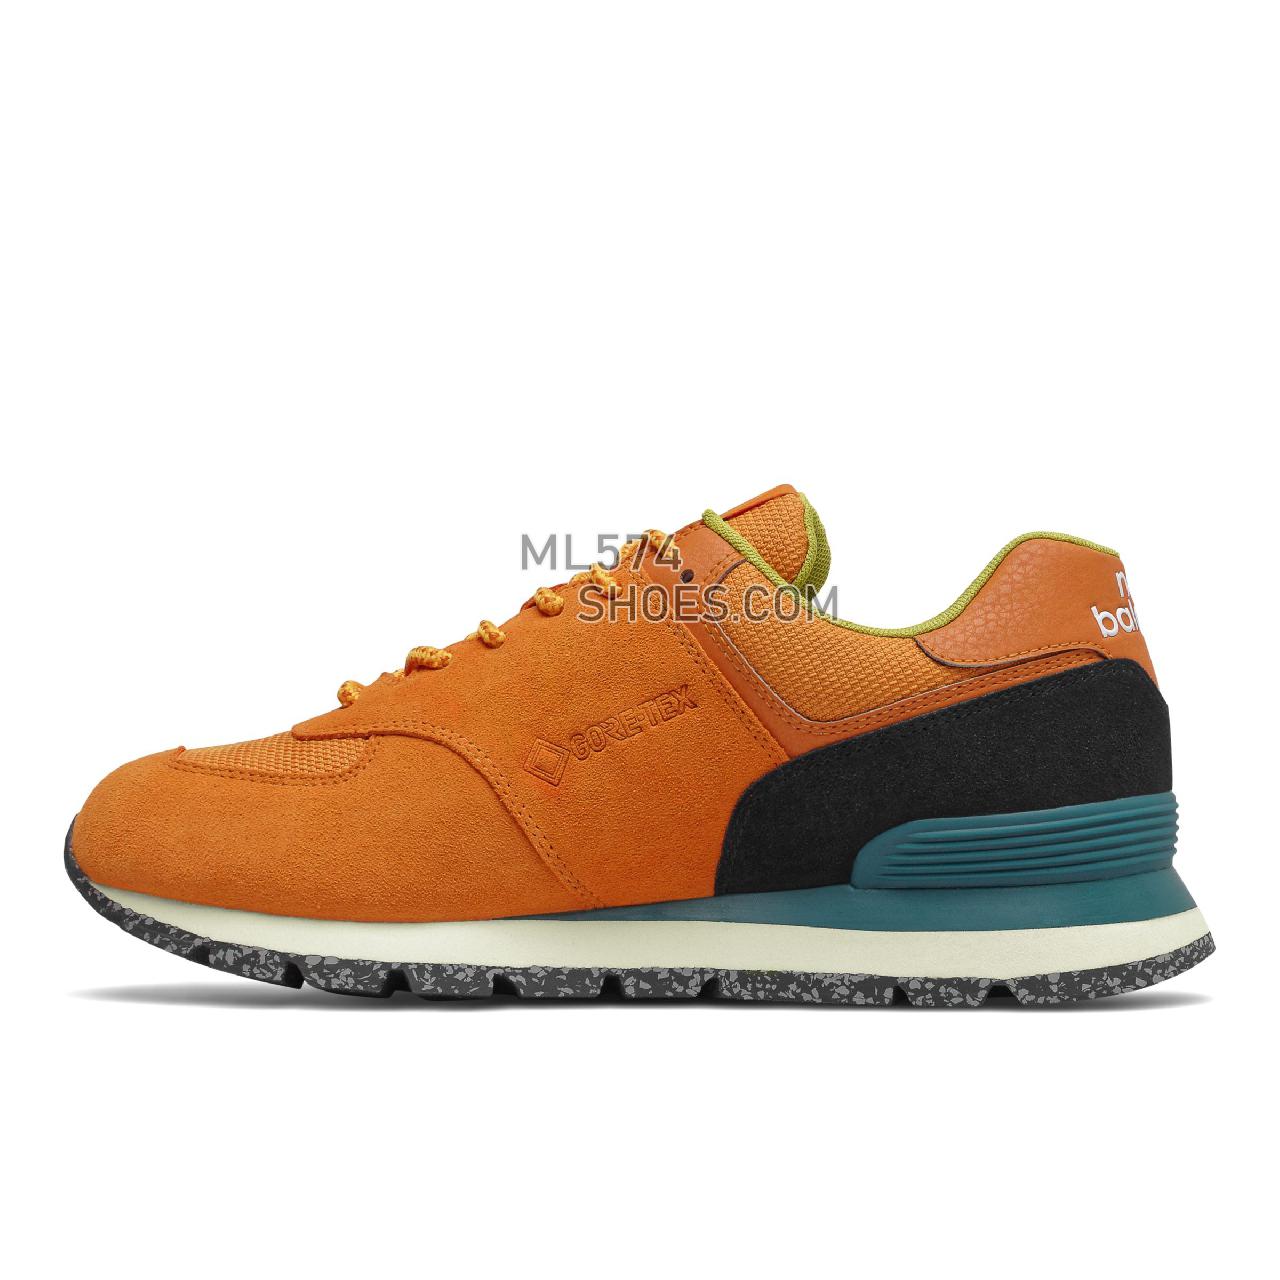 New Balance M574DGV2 - Men's Classic Sneakers - Madras Orange with Black - M574DGEX